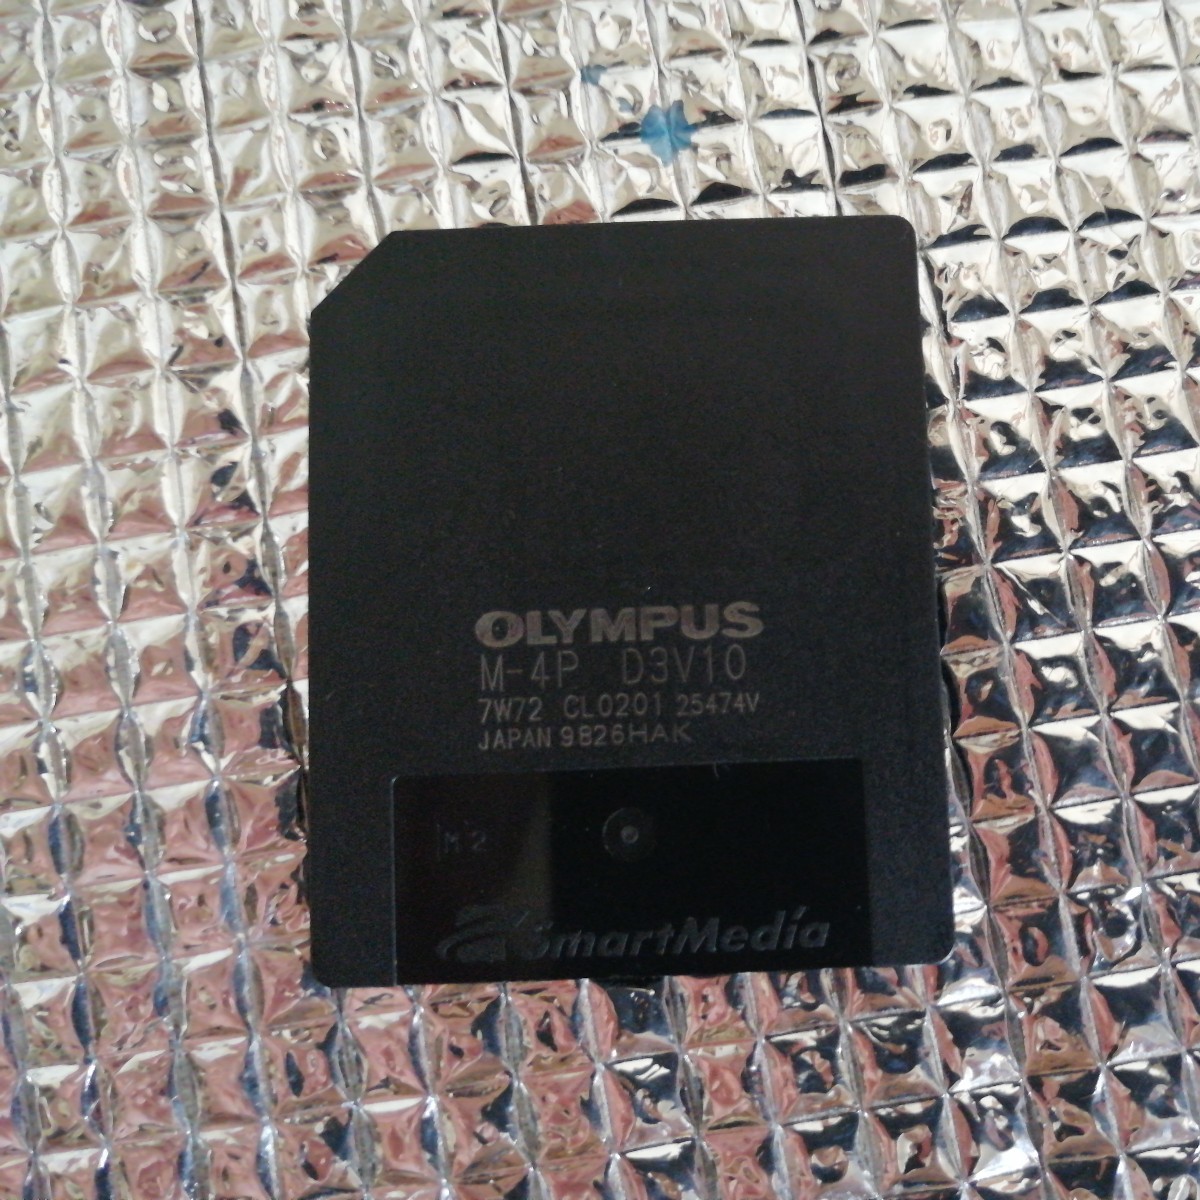  Smart Media OLYMPUS 4M, memory card SM Smart Media